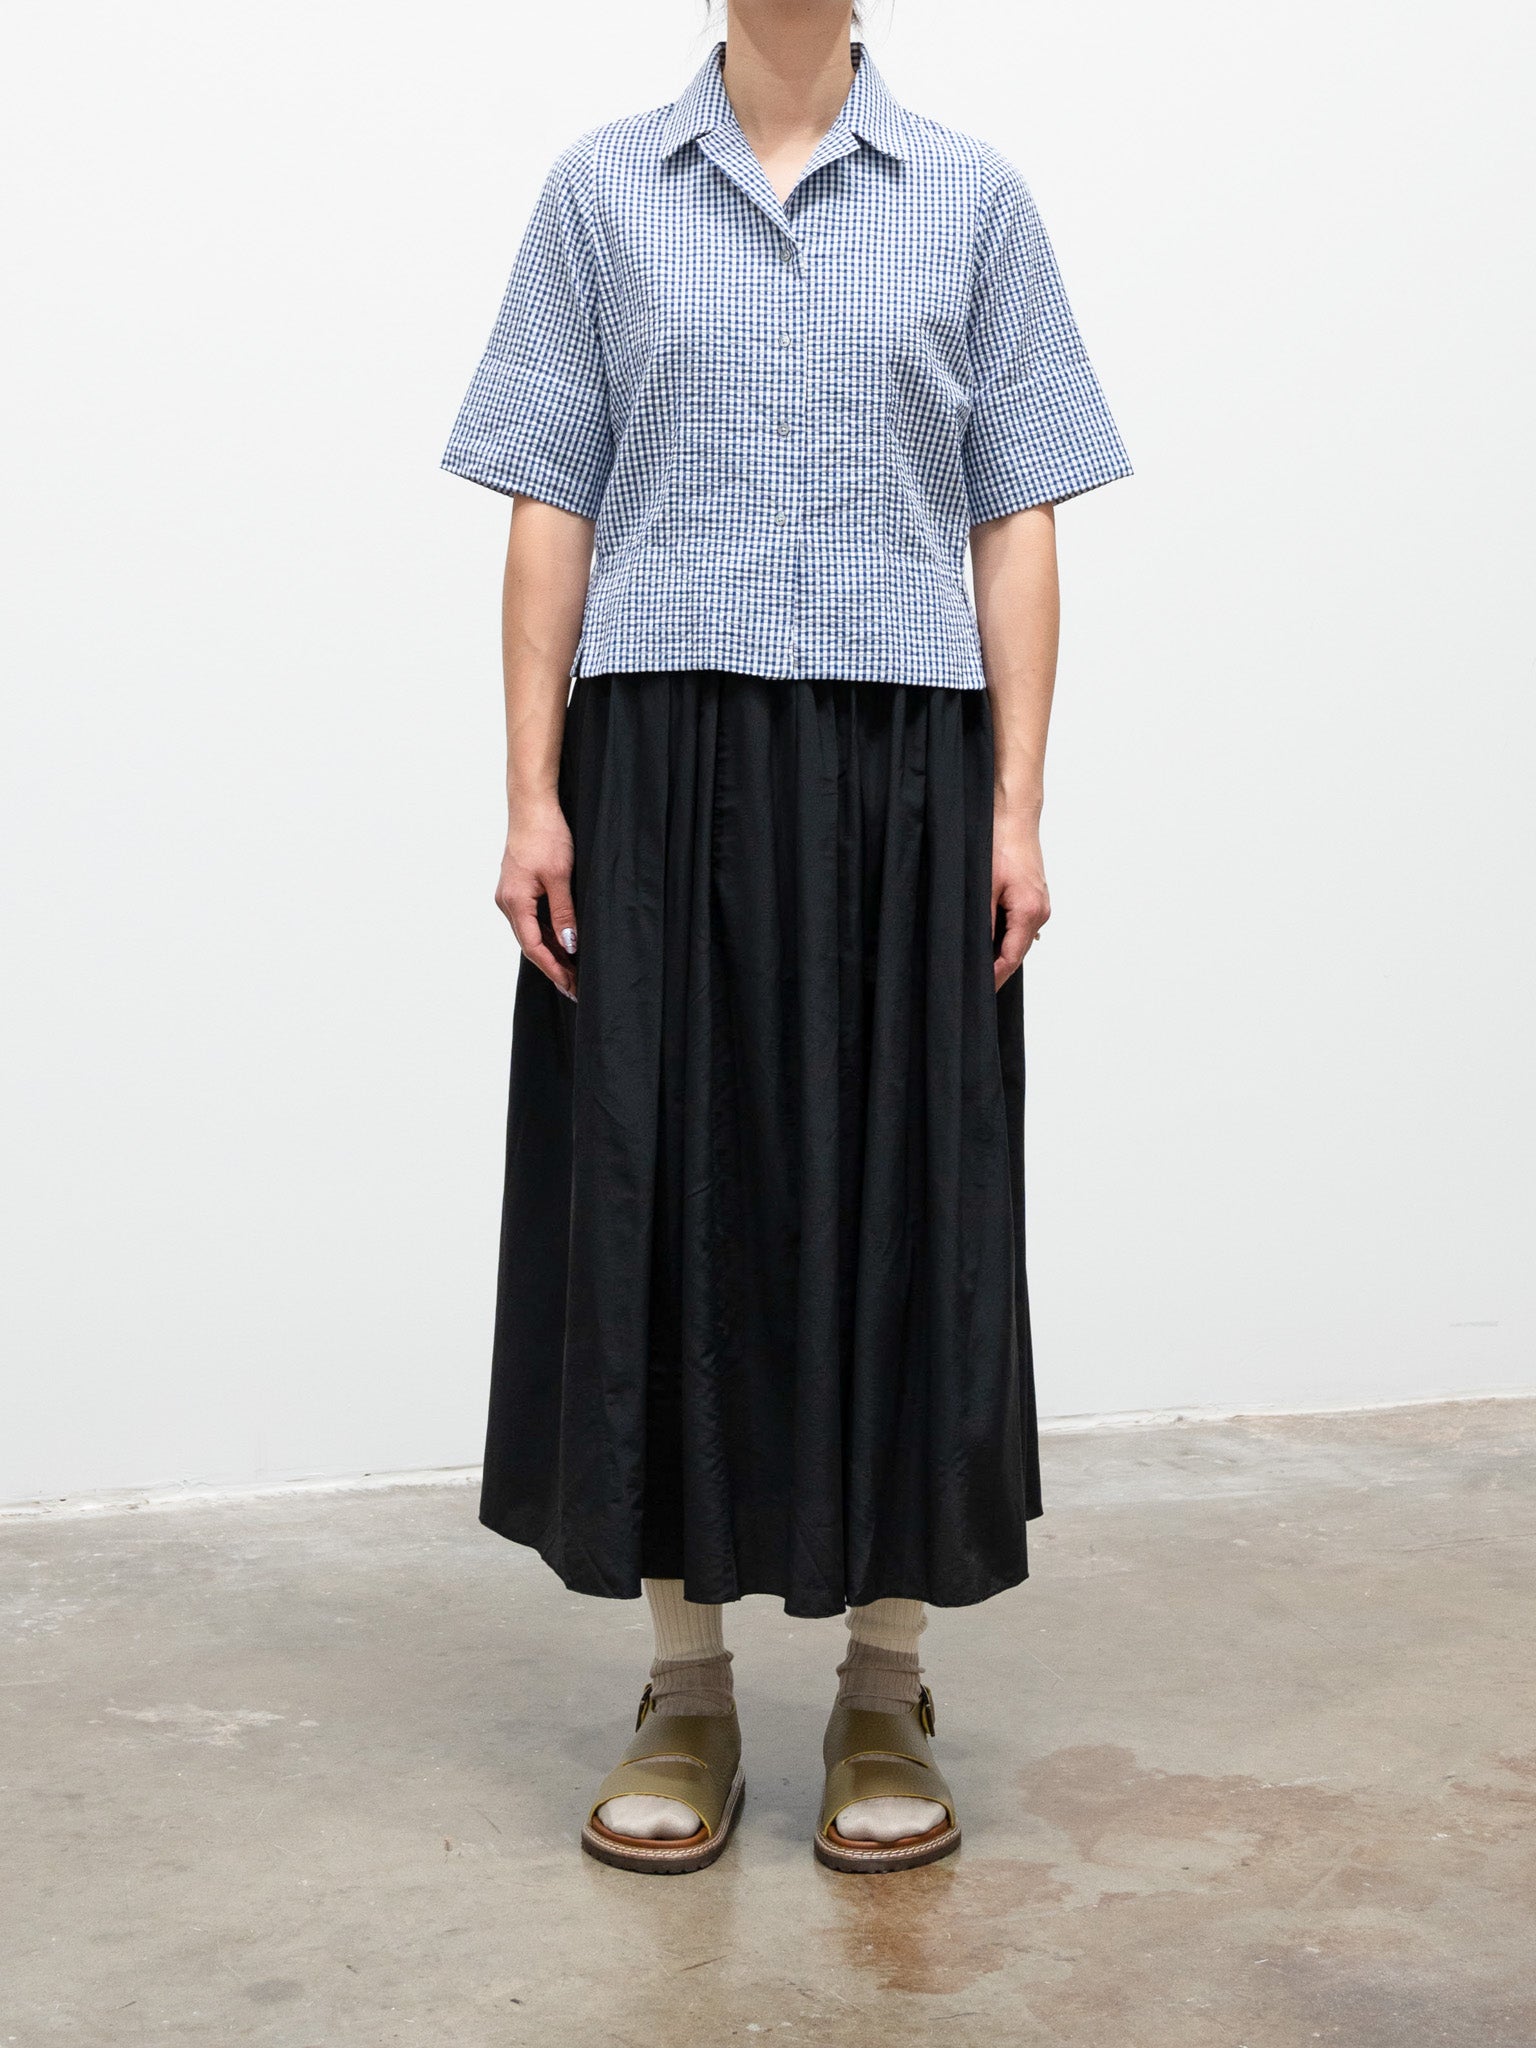 Namu Shop - Sara Lanzi Gathered Skirt - Black